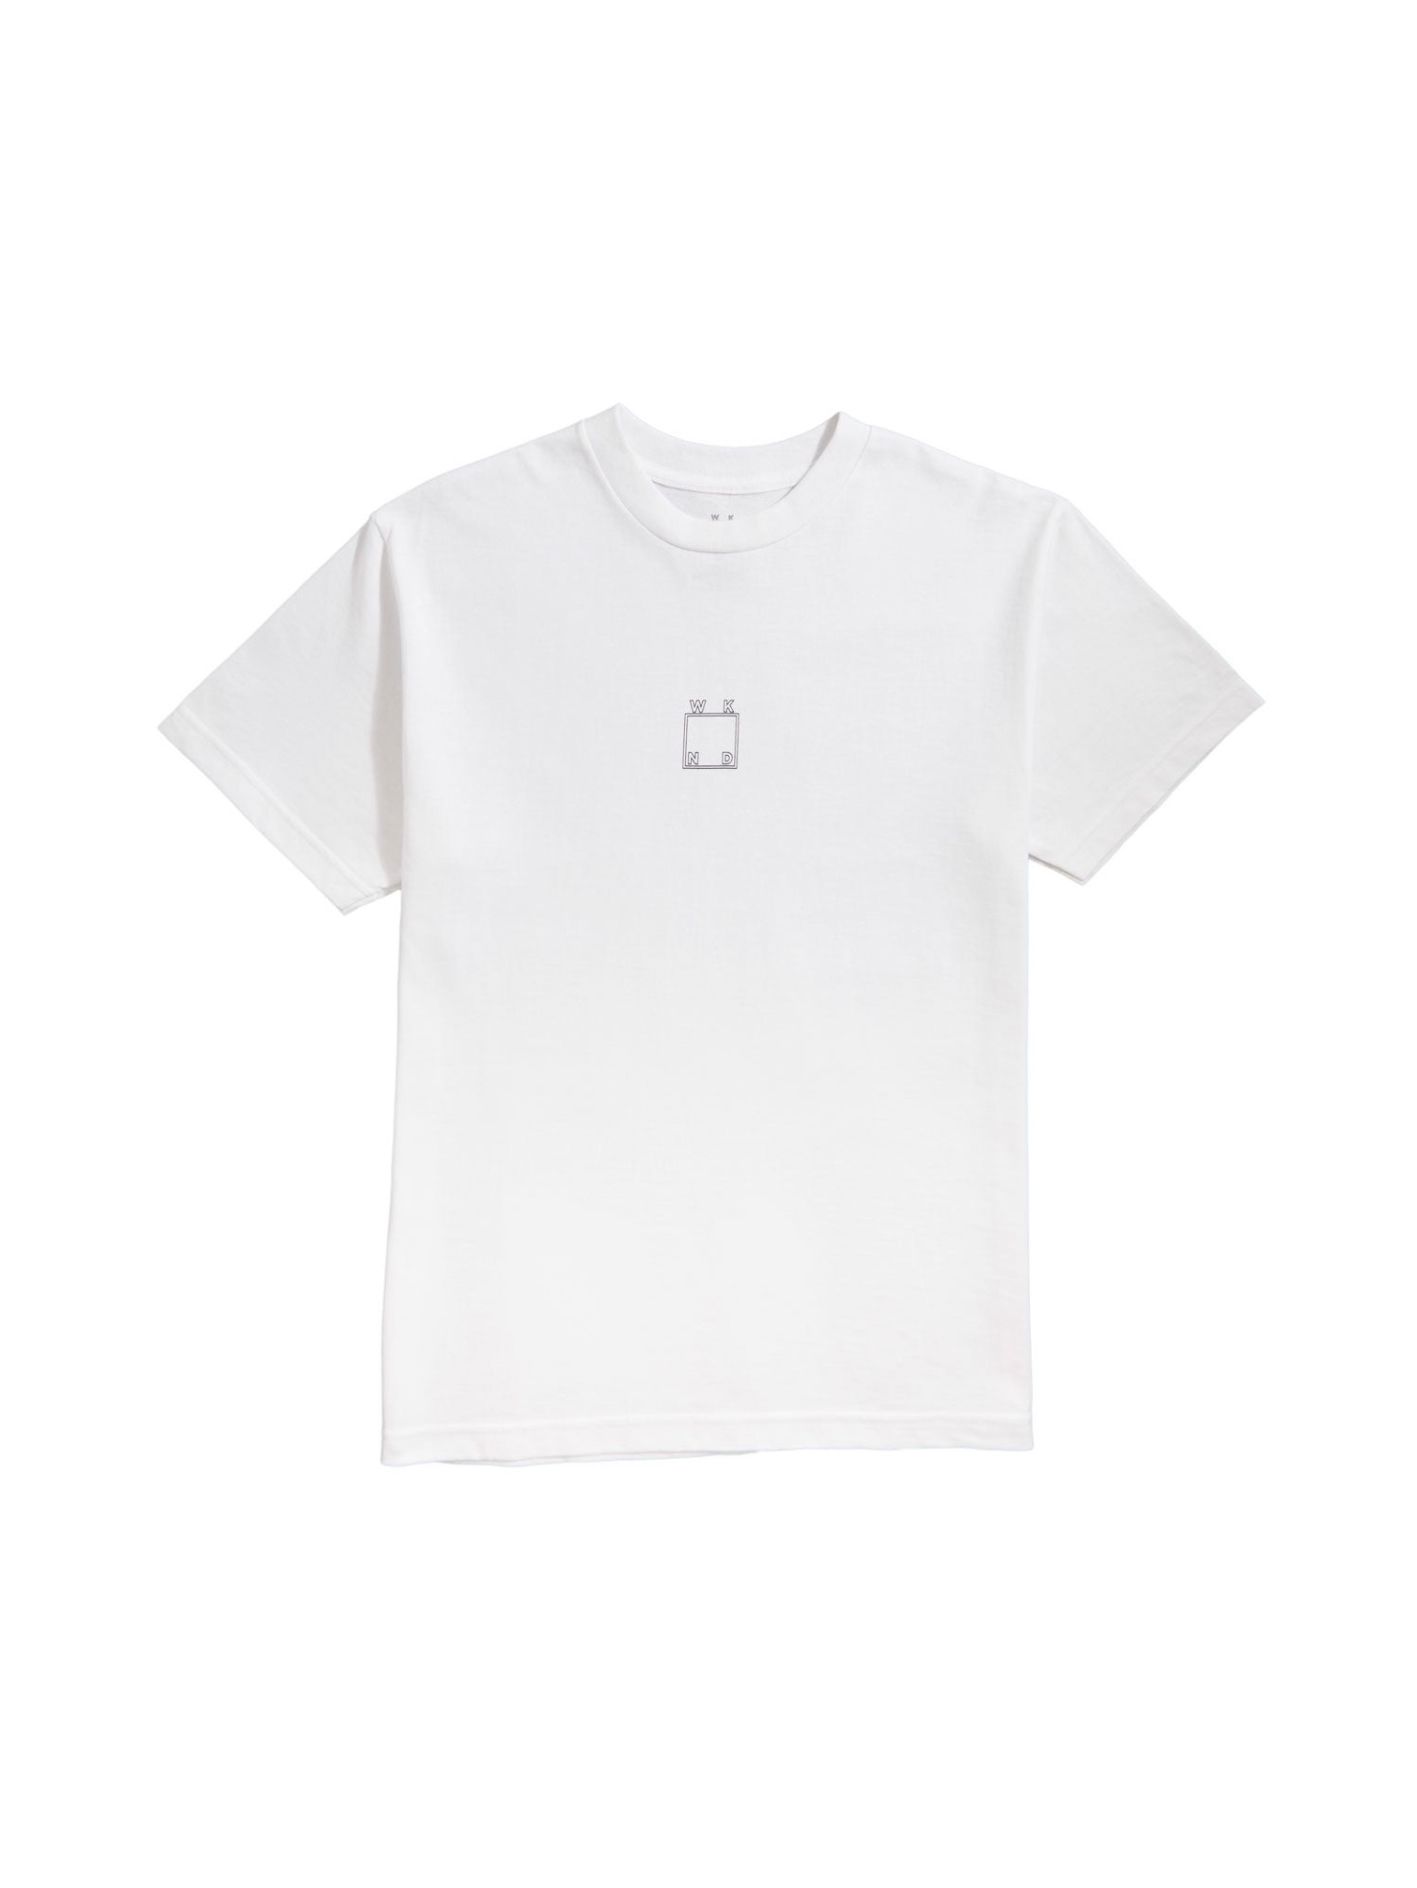 GADID ANONIEM ETHAN / WHITE - Tシャツ/カットソー(半袖/袖なし)